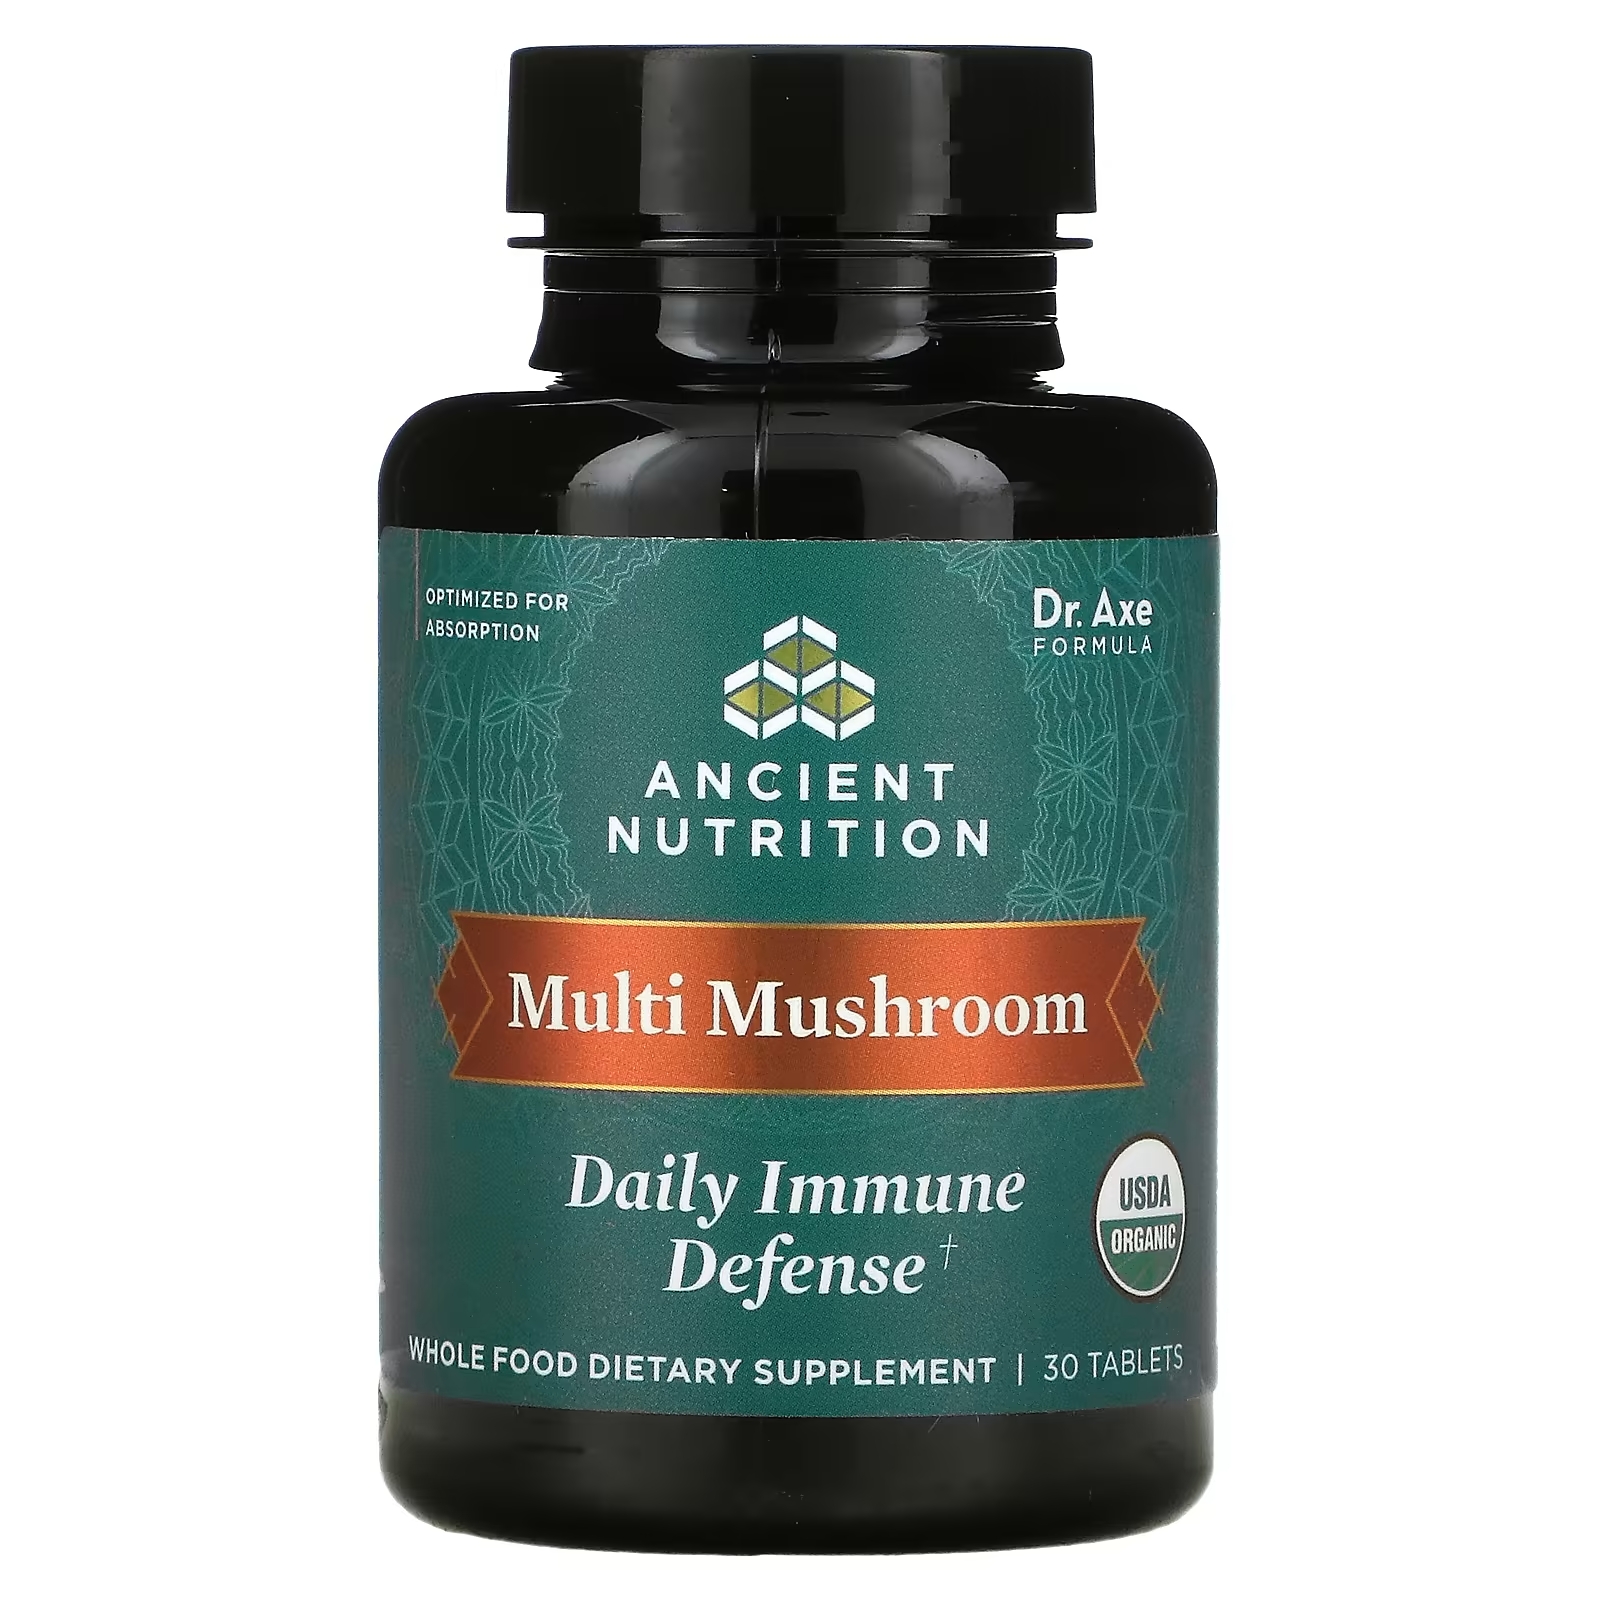 Dr. Axe Ancient Nutrition Multi Mushroom ежедневная иммунная защита, 30 таблеток dr axe ancient nutrition multi mushroom ежедневная иммунная защита 30 таблеток